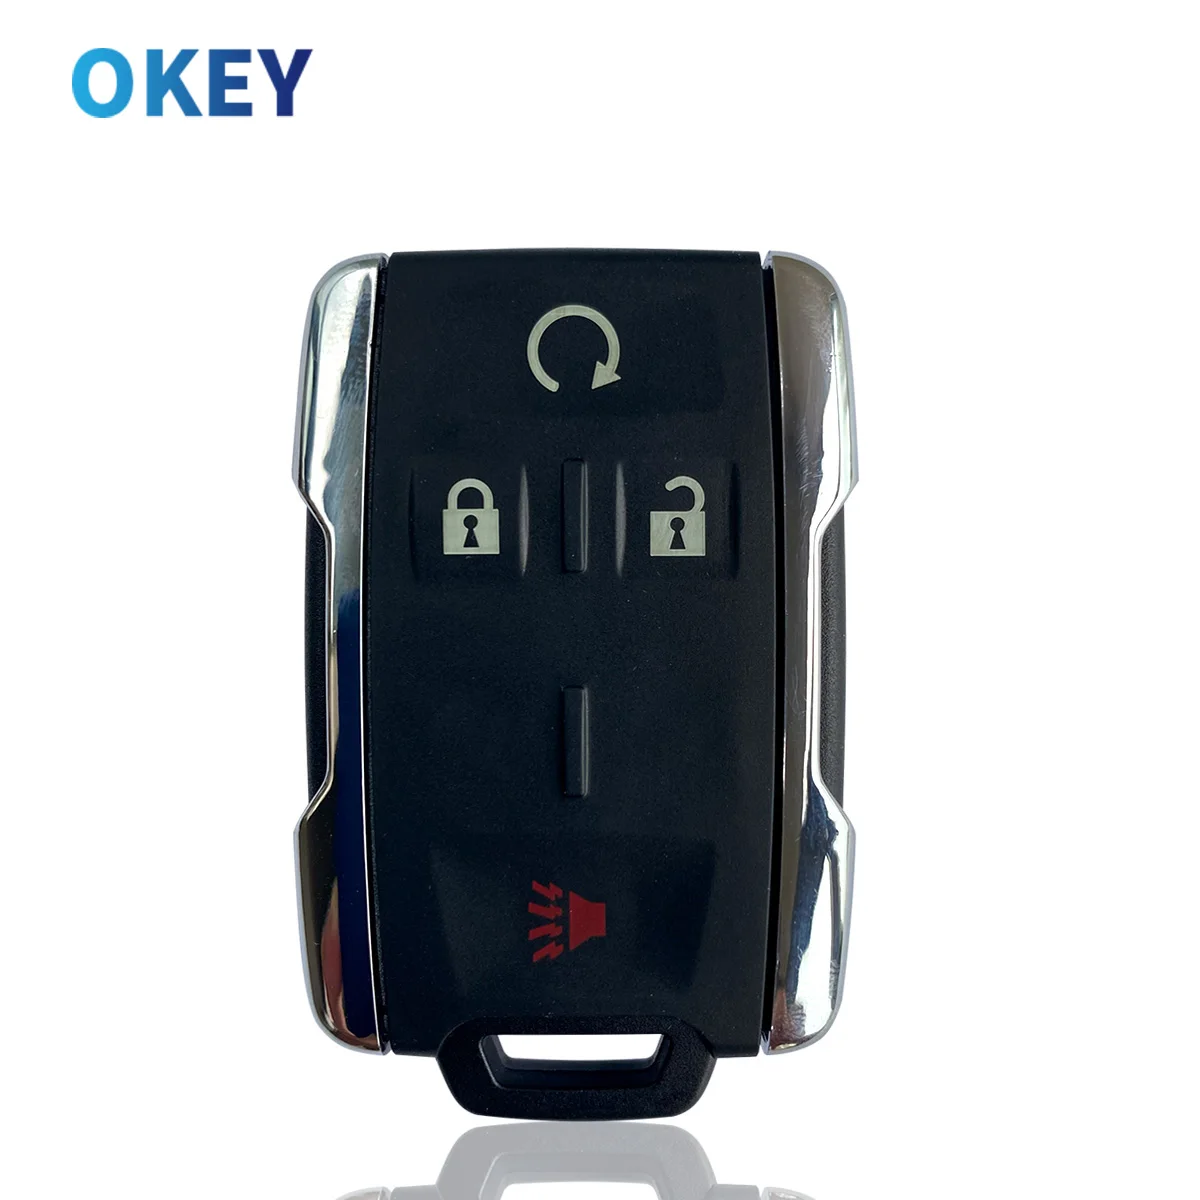 Okey Remote Car Key Shell Replacement Case For Chevrolet Silverado Colorado/GMC Sierra Canyon 2014 2015 2016 FCC: M3N-32337100